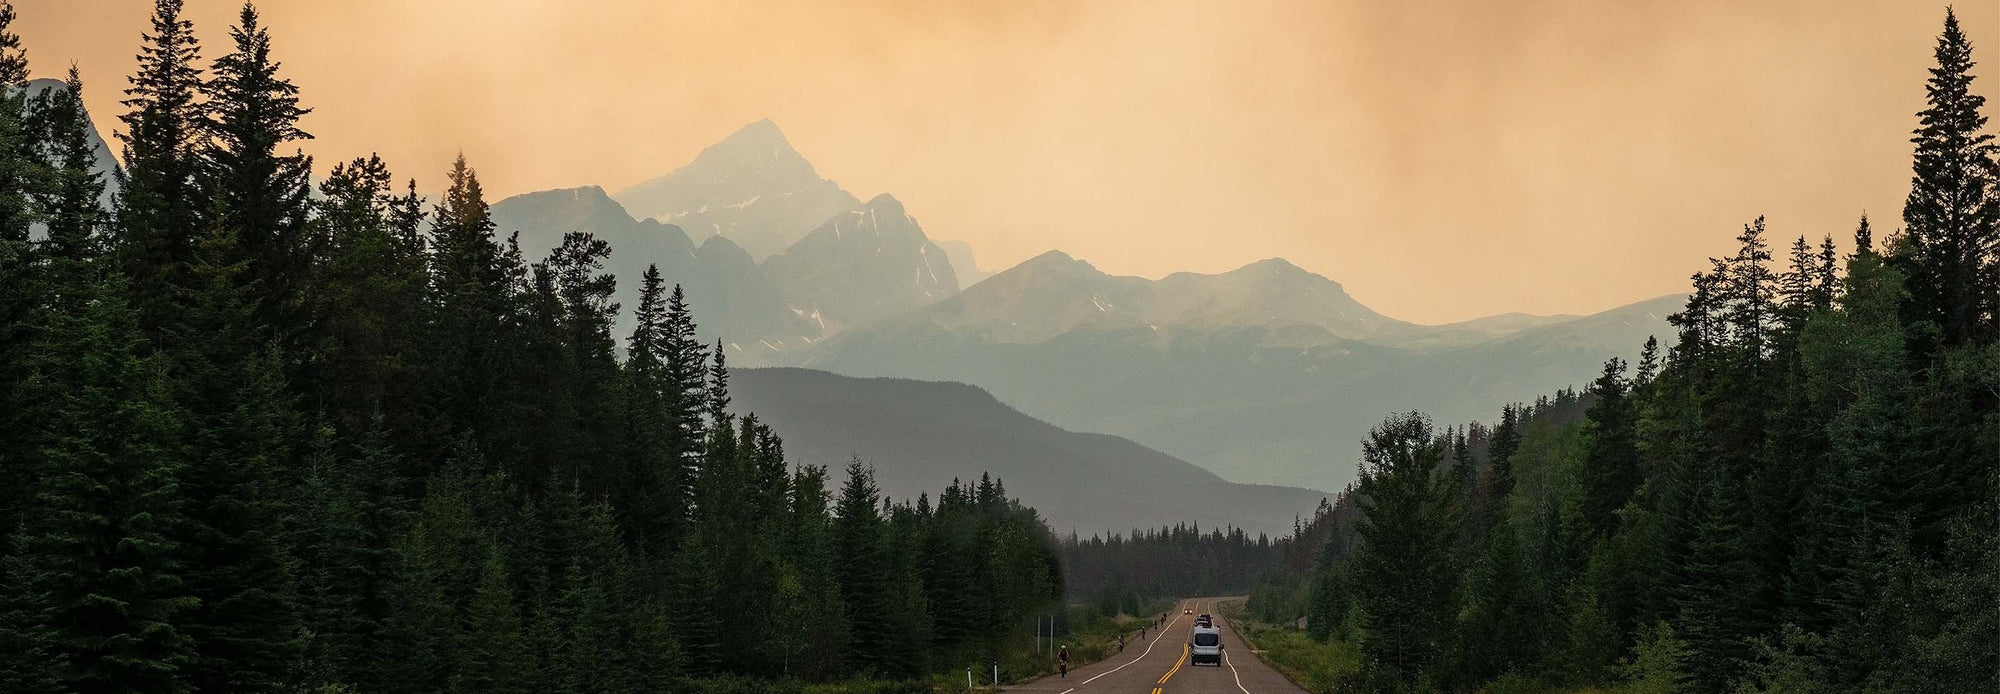 wildfire smoke rising over mountains near Alberta Canada